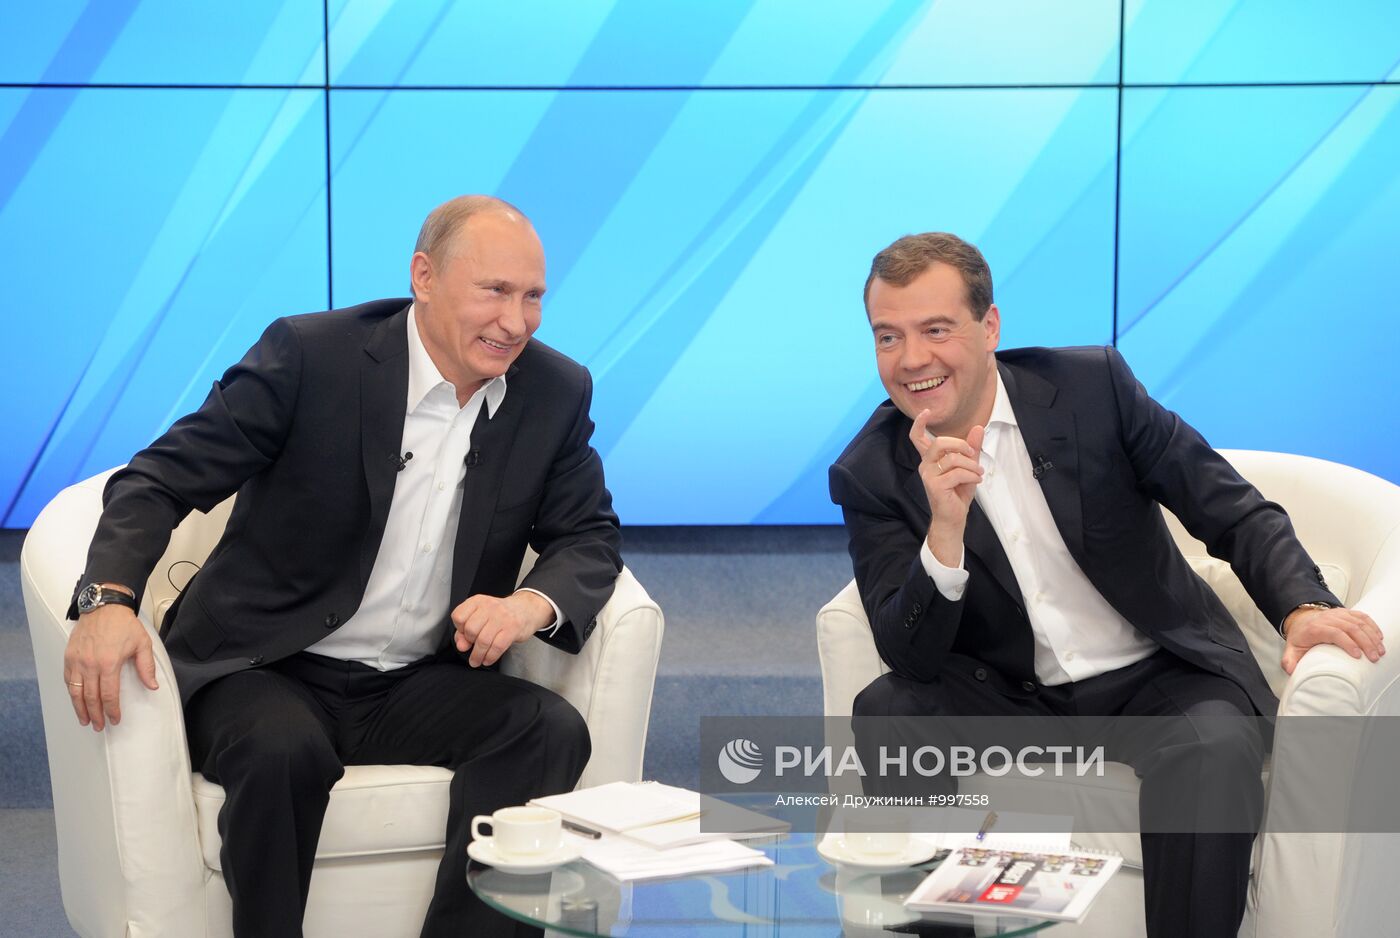 Д.Медведев и В.Путин встретились с избирателями в Москве